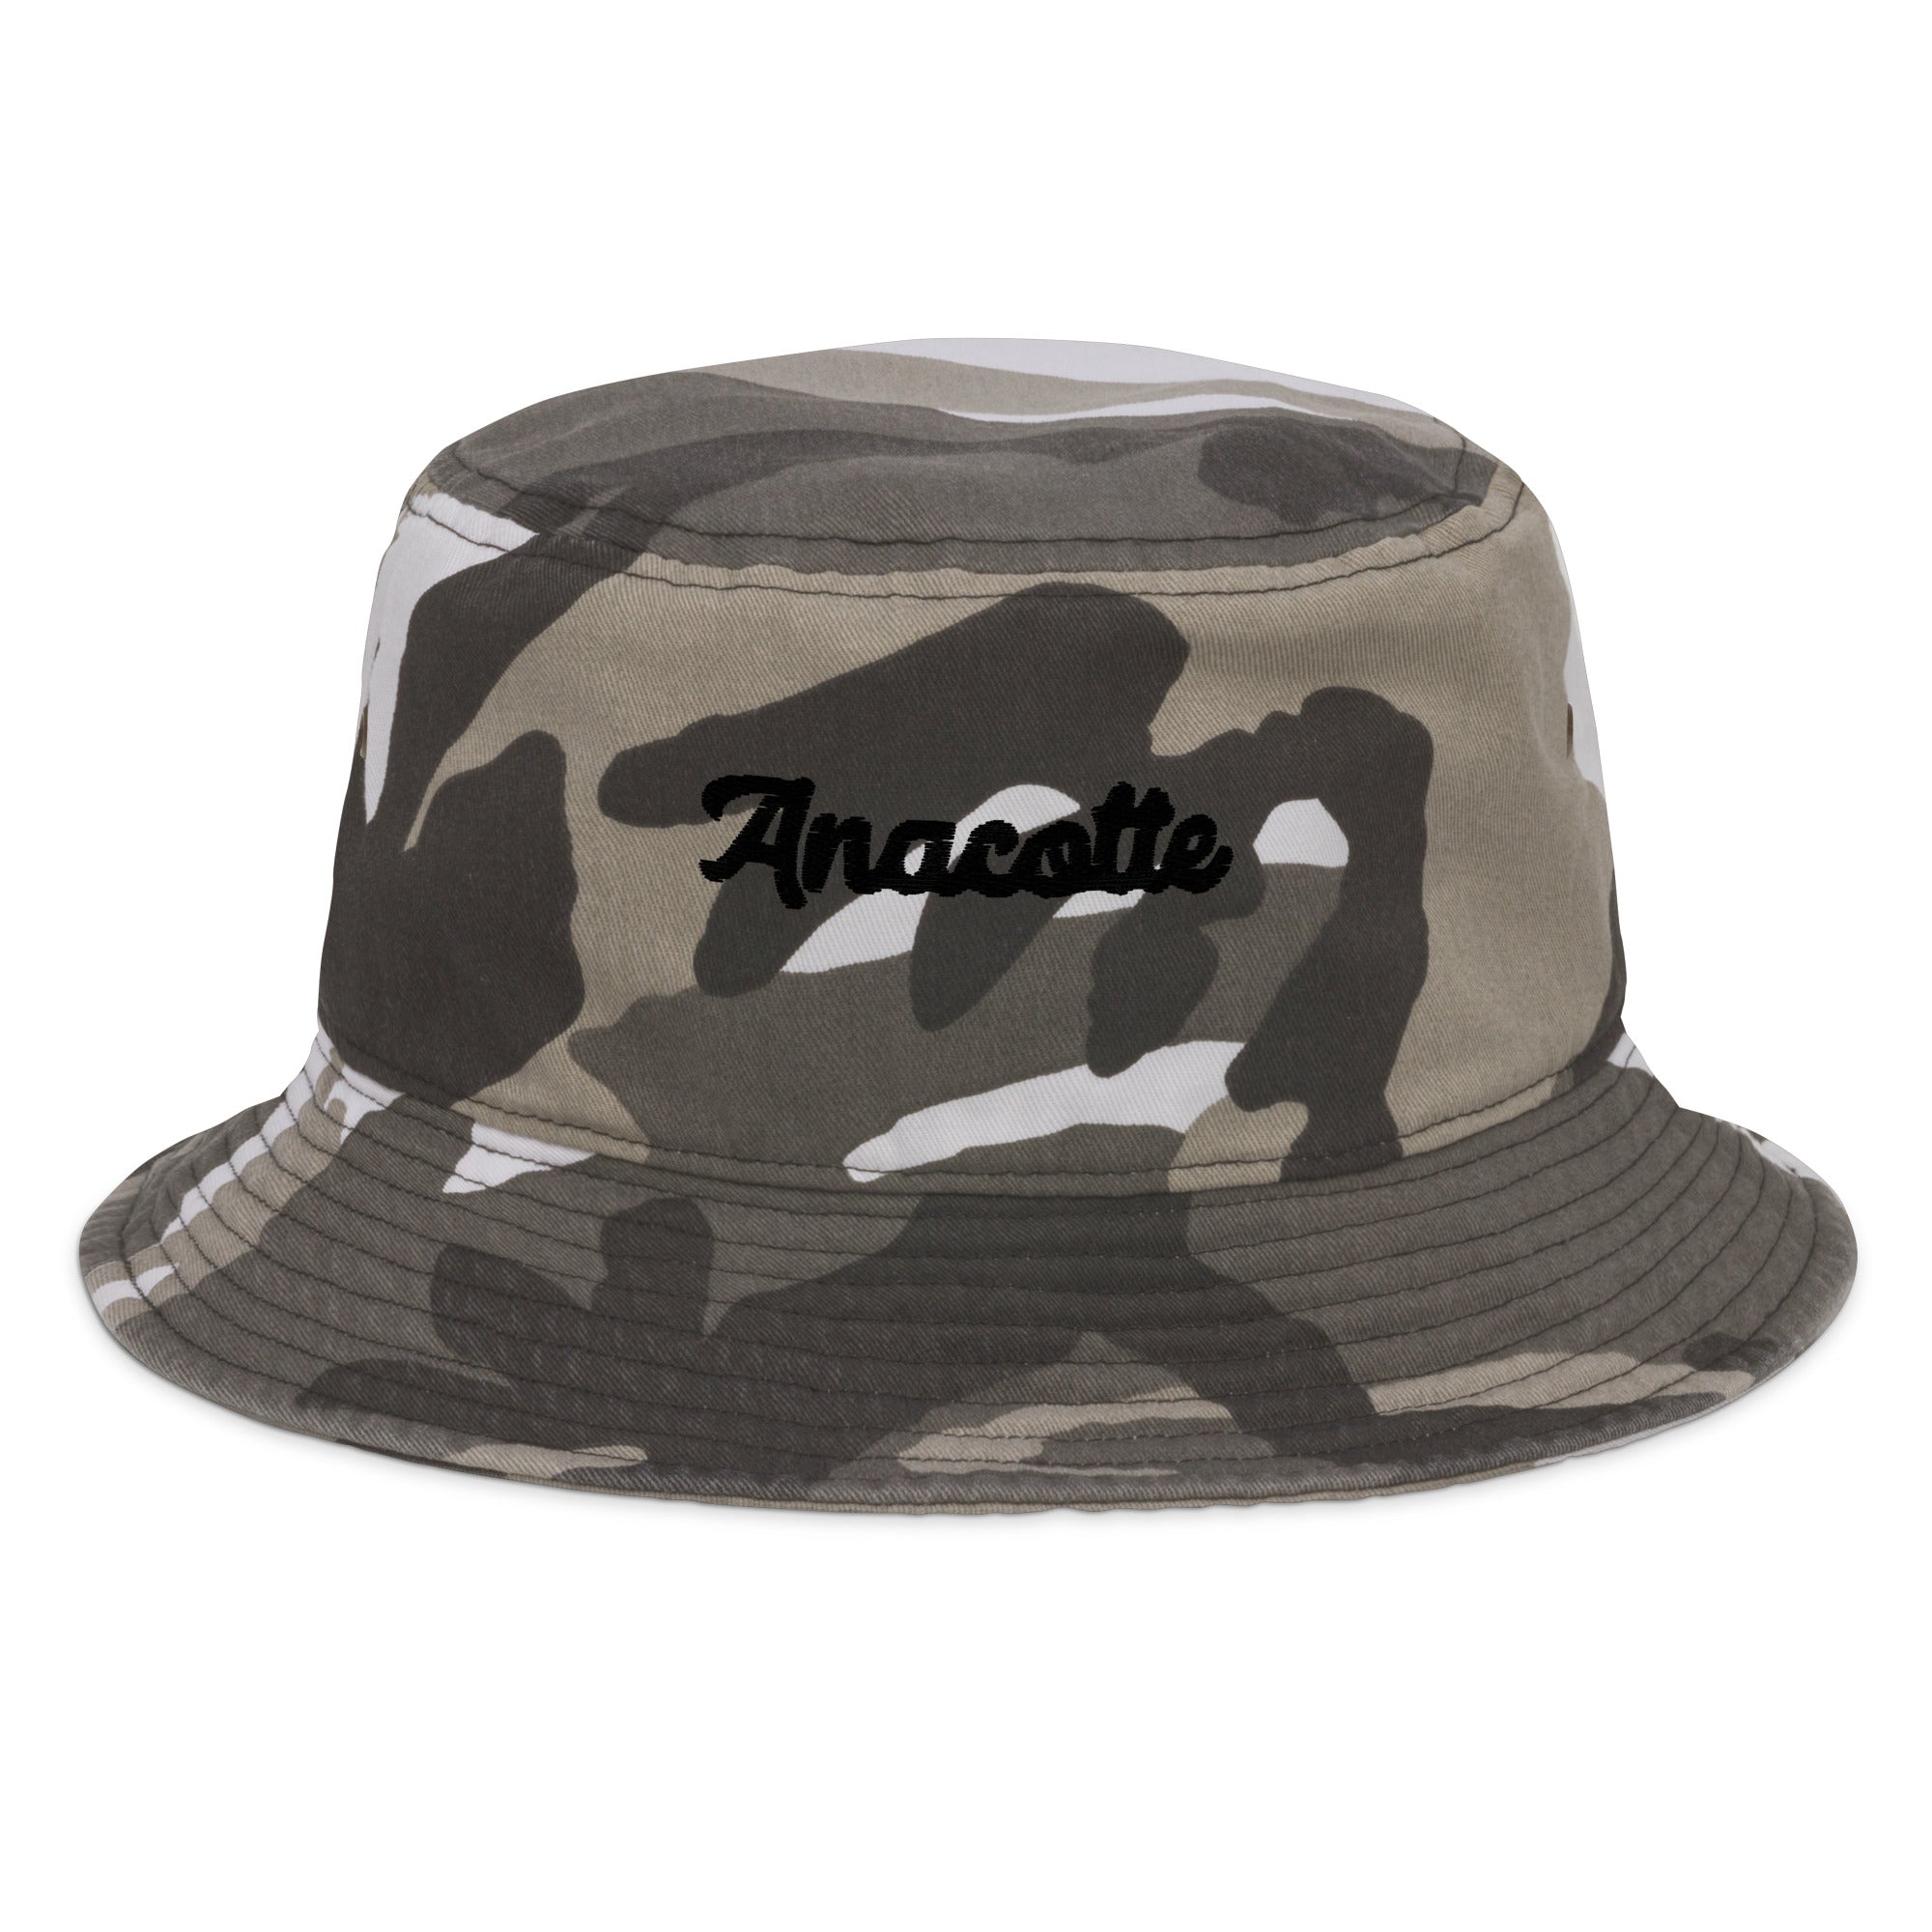 Anacotte Fashion 100% Cotton bucket hat